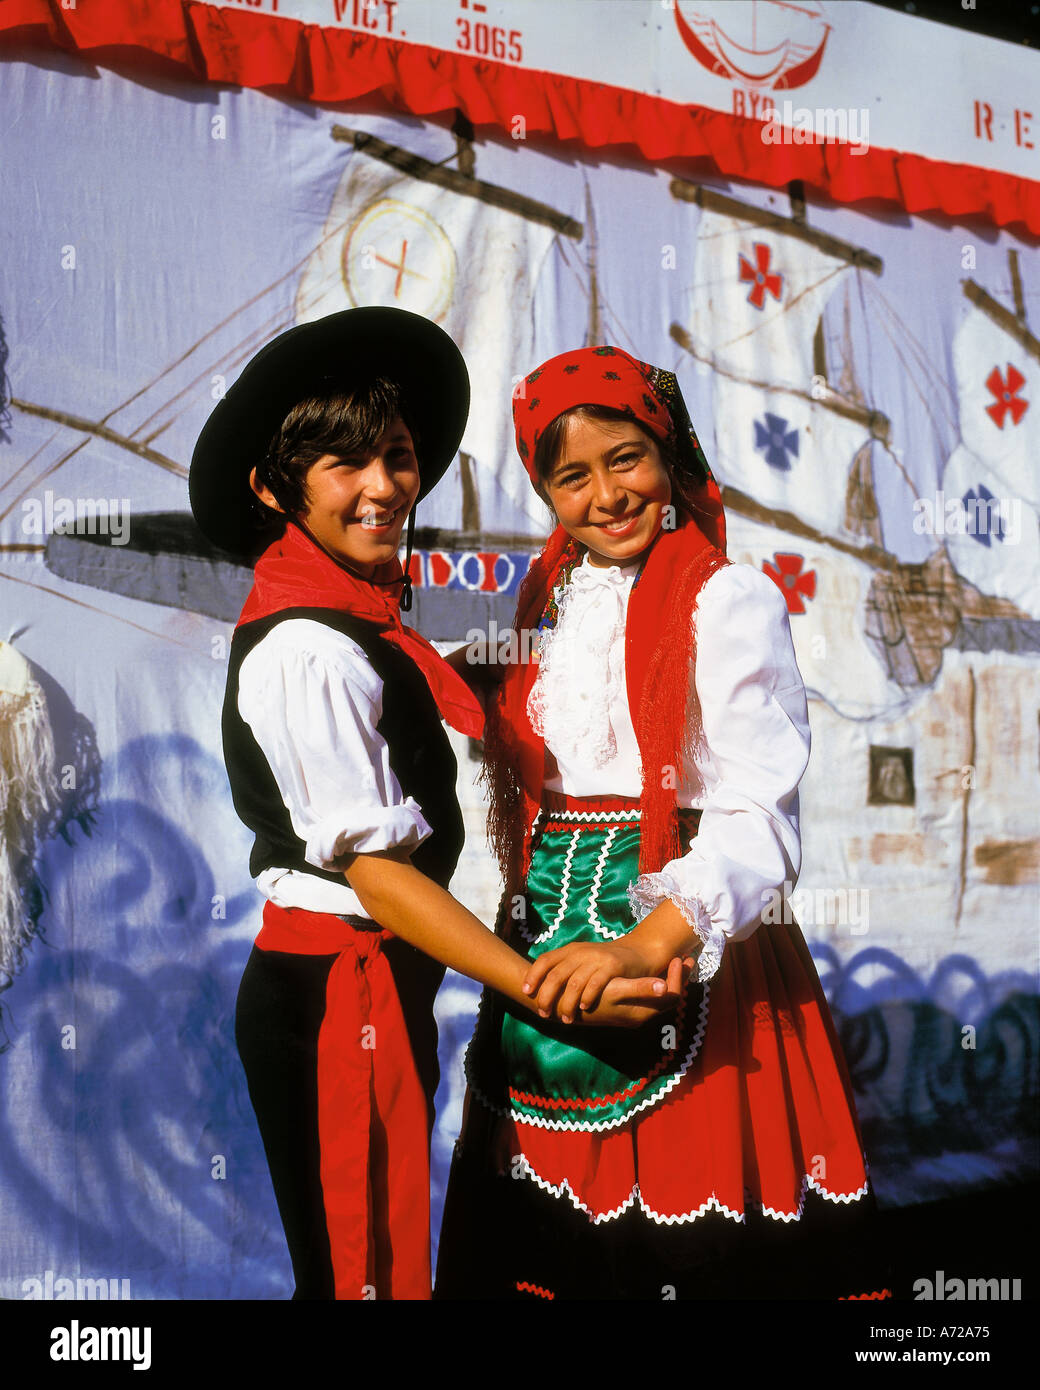 Children in Portuguese Costumes in Portugal Stock Photo - Alamy